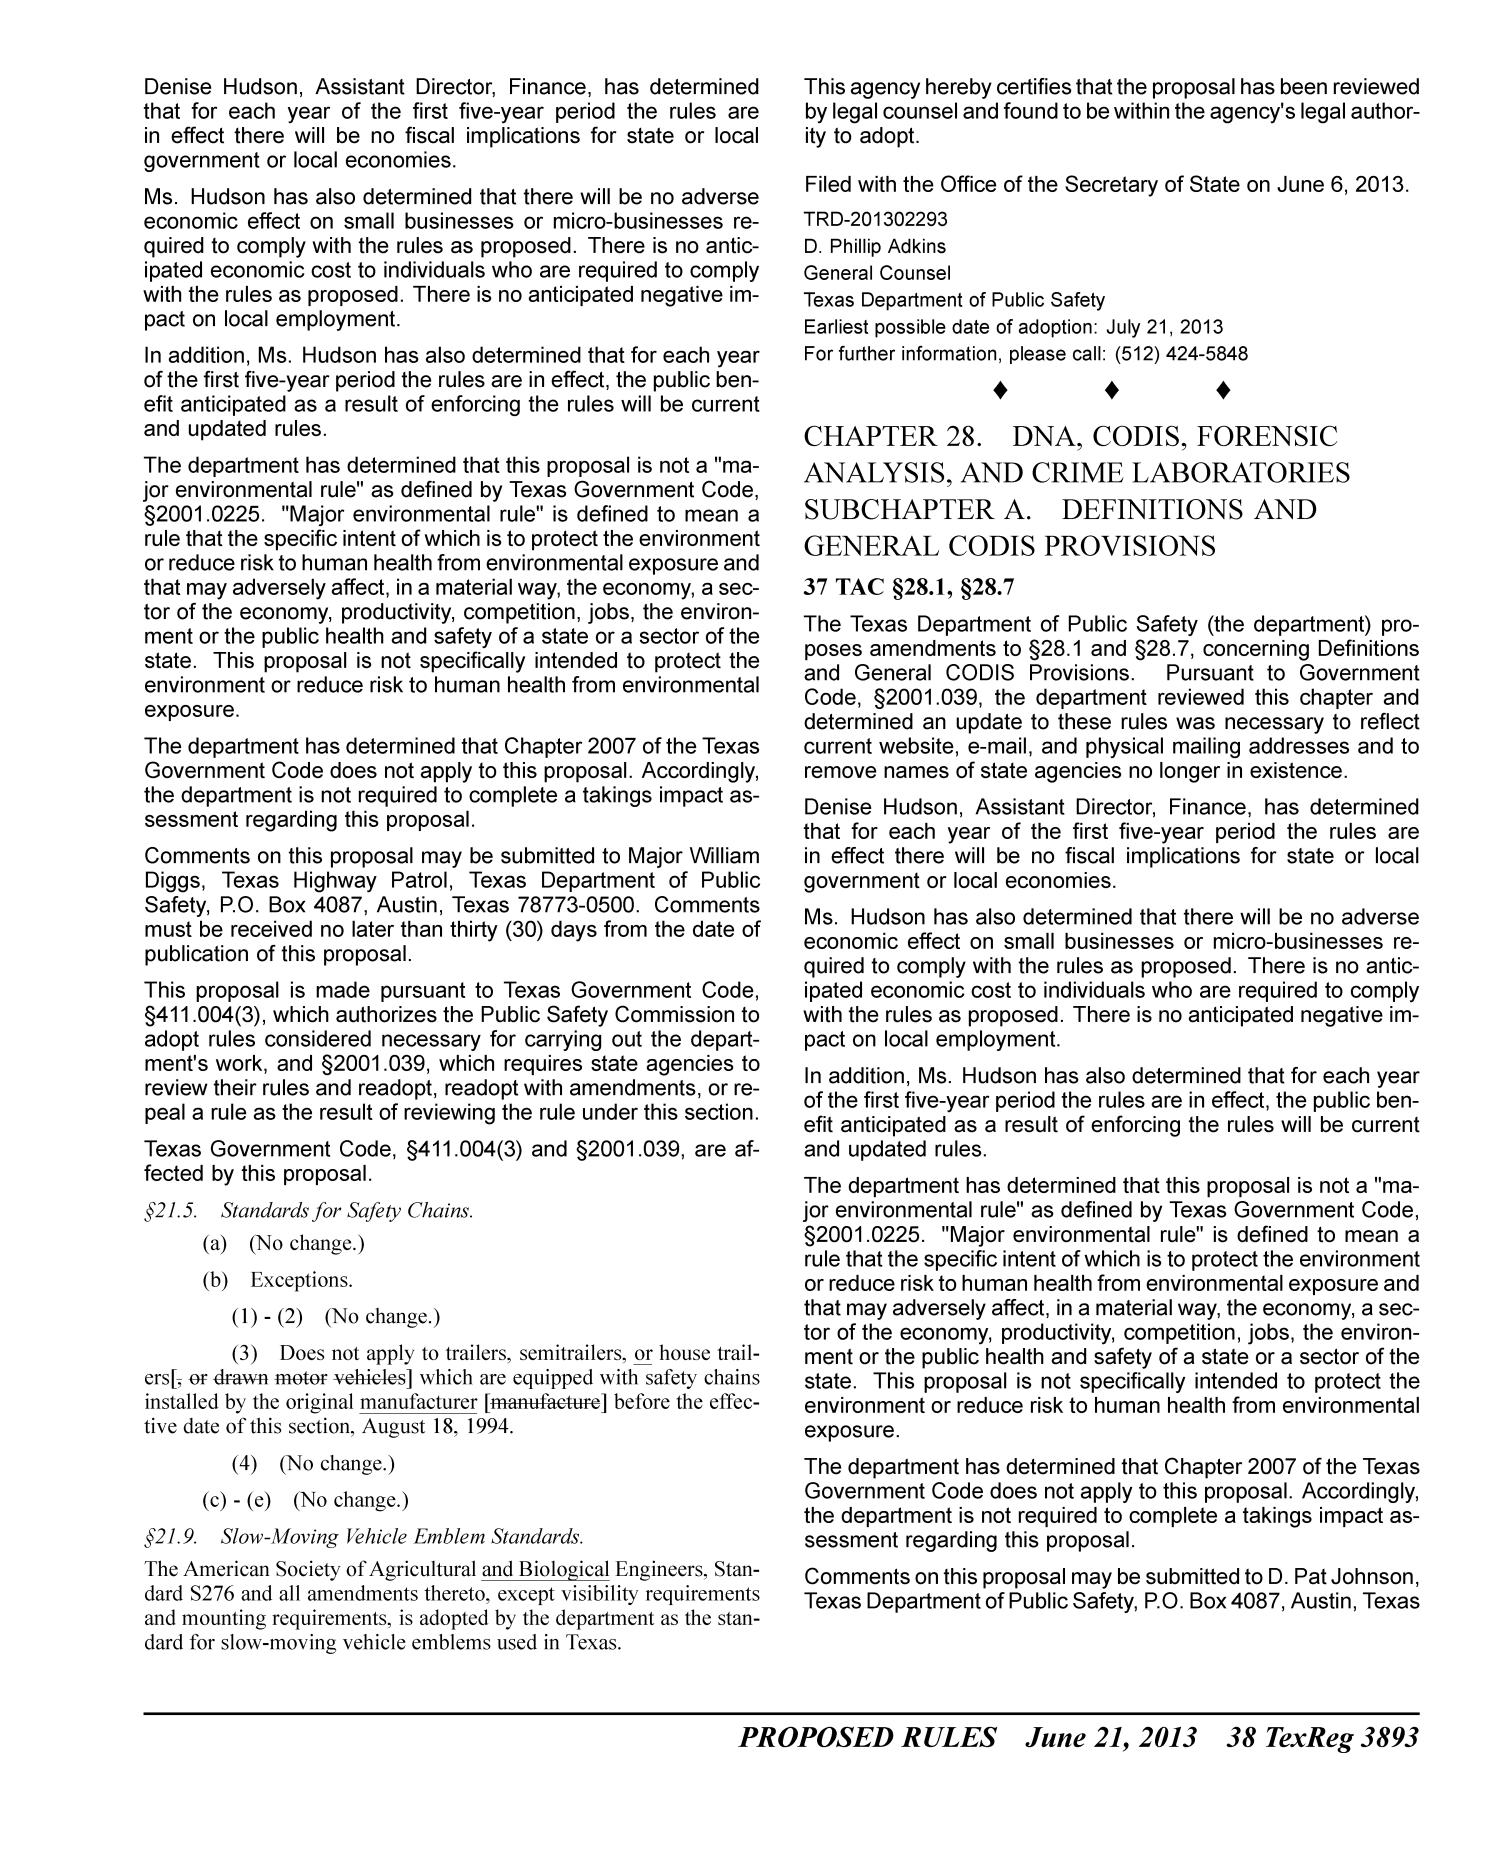 Texas Register, Volume 38, Number 25, Pages 3857-4052, June 21, 2013
                                                
                                                    3893
                                                